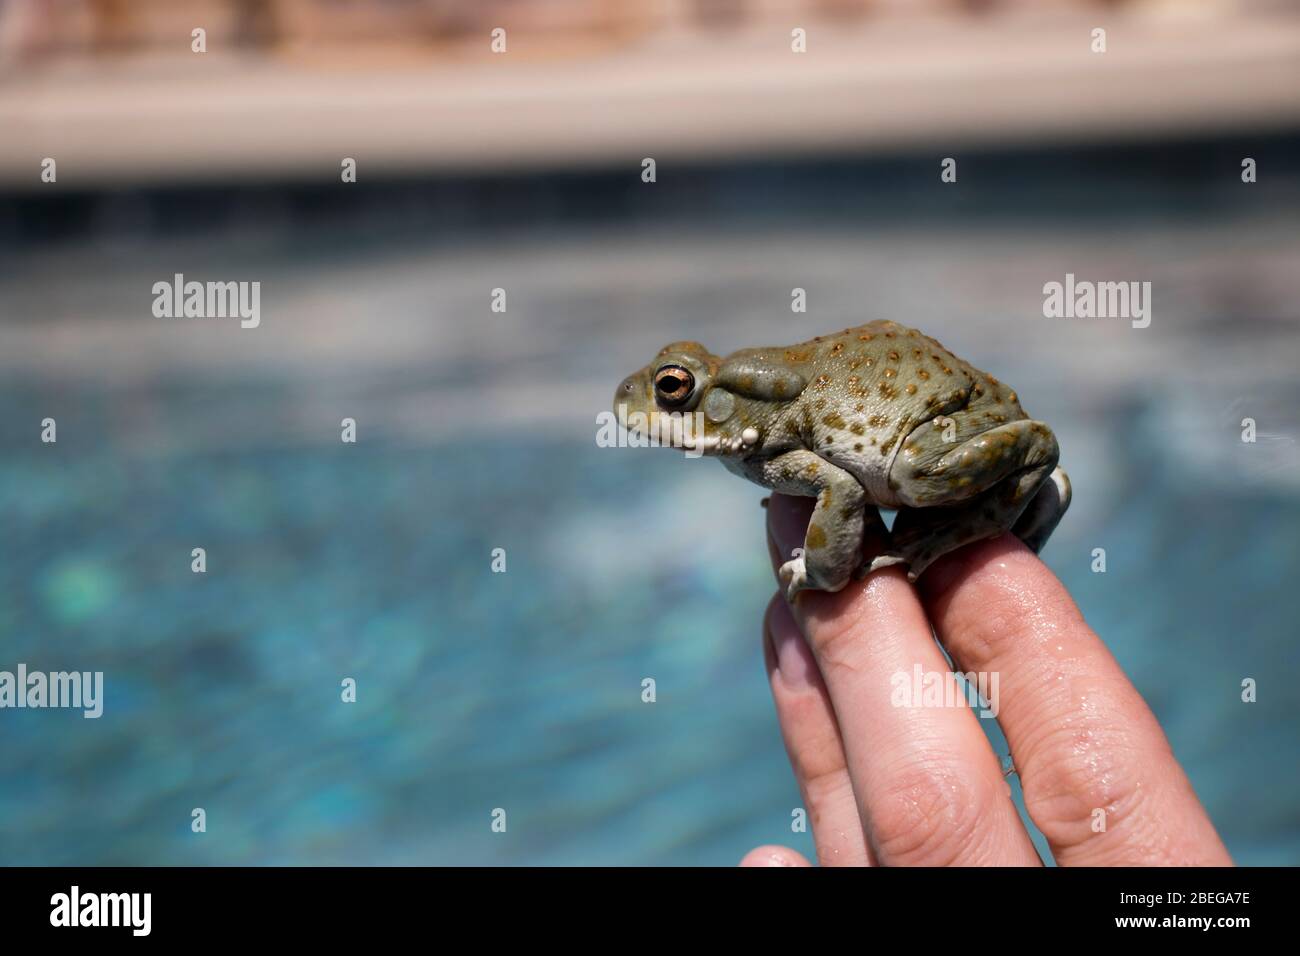 Frosch auf Finger nah an grünen Arizona Kröte am Wasser. Person, die grüne Kröte an den Fingern anhechst. Nahaufnahme Amphibien. Stockfoto